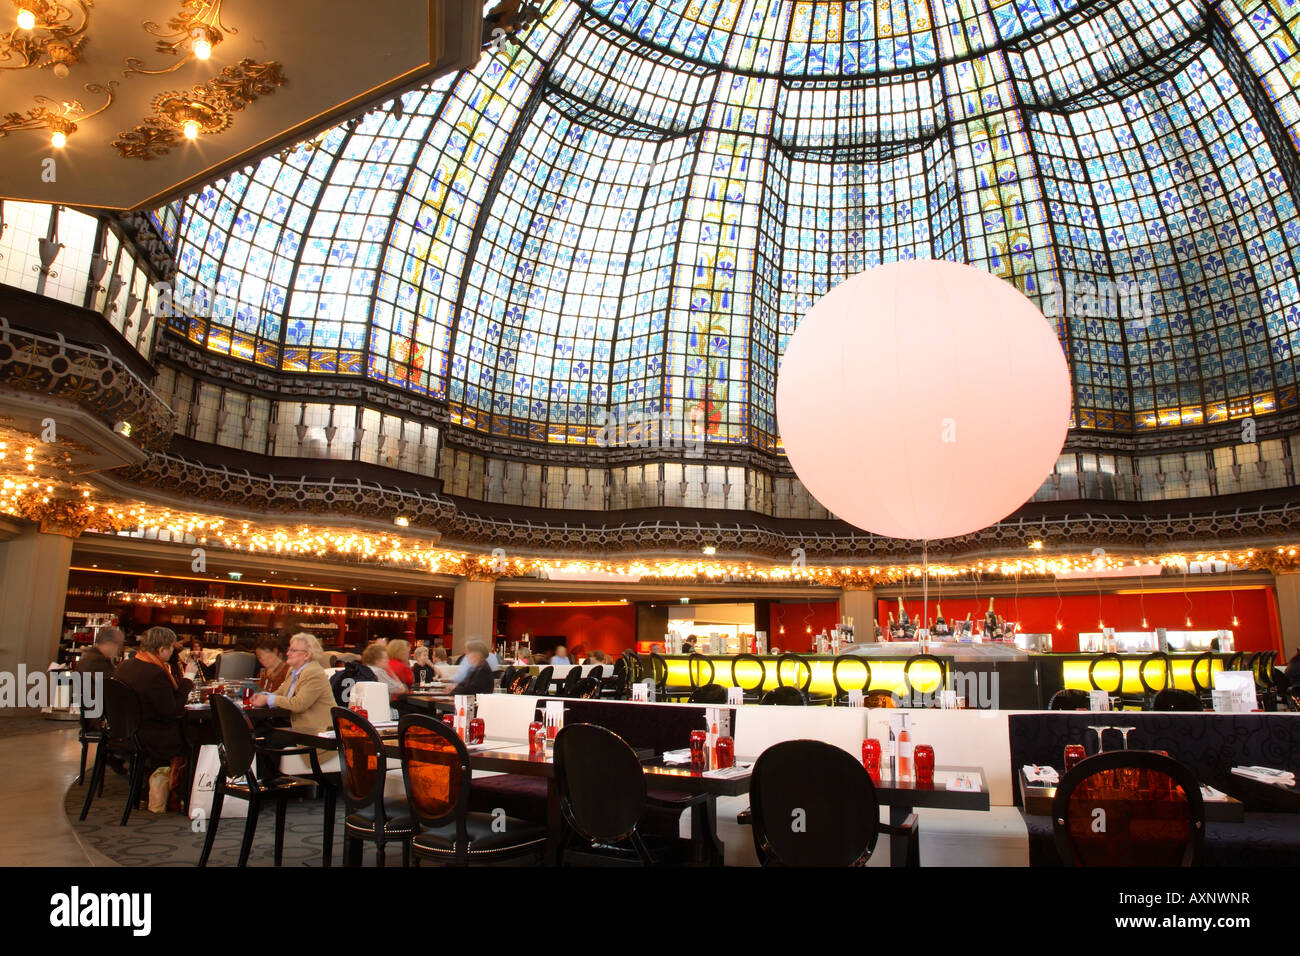 The Dome at Printemps Department Store Restaurant, Paris, France Stock Photo